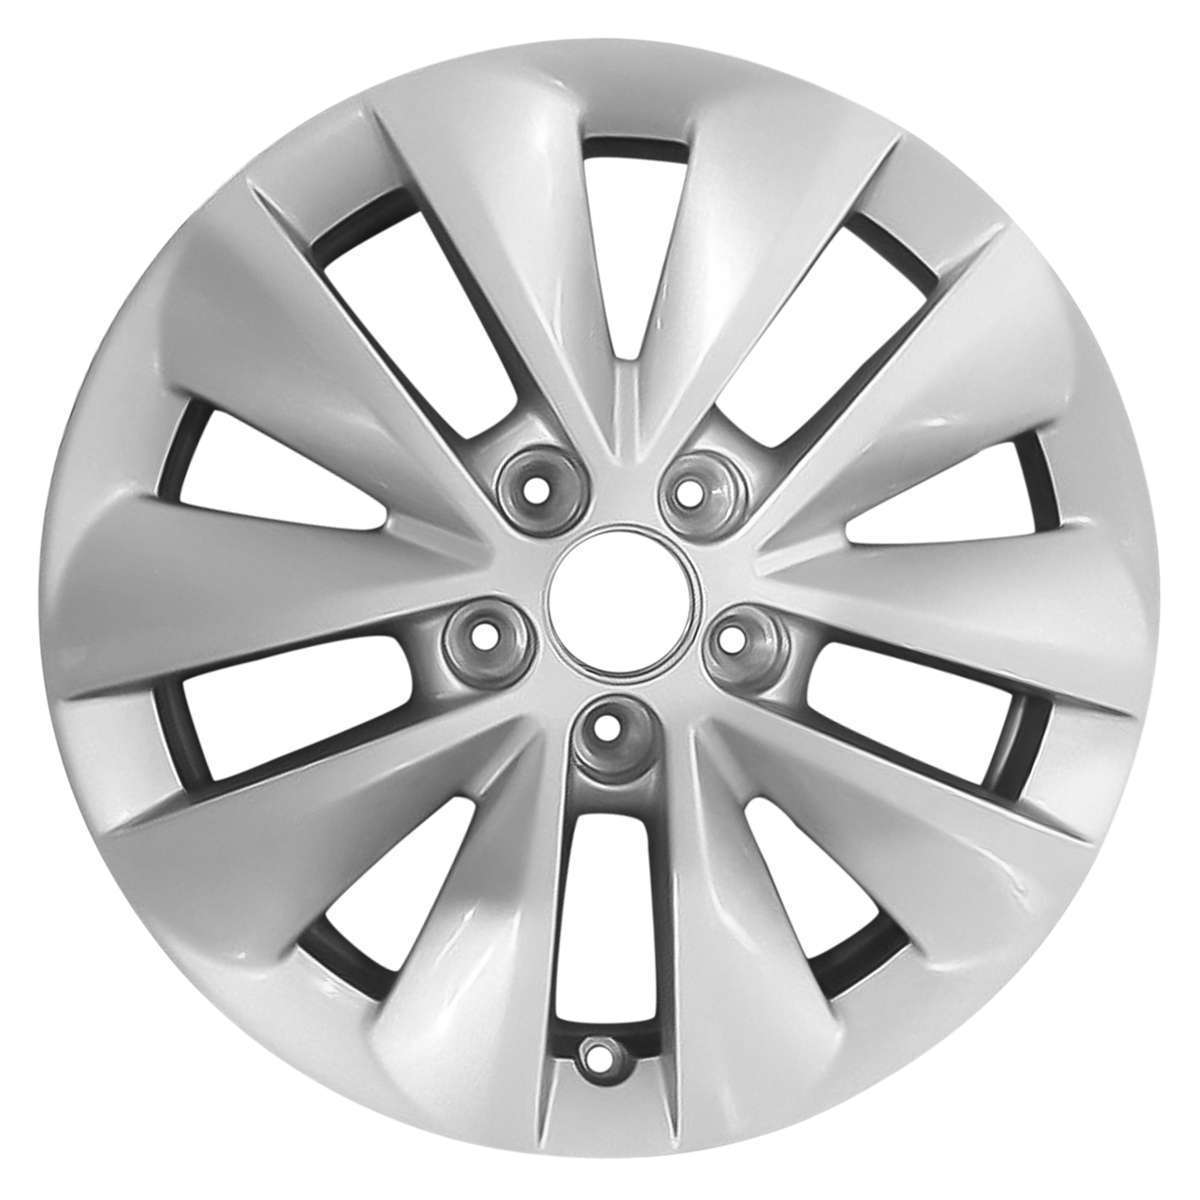 2014 Dodge Dart 16" OEM Wheel Rim W2550S